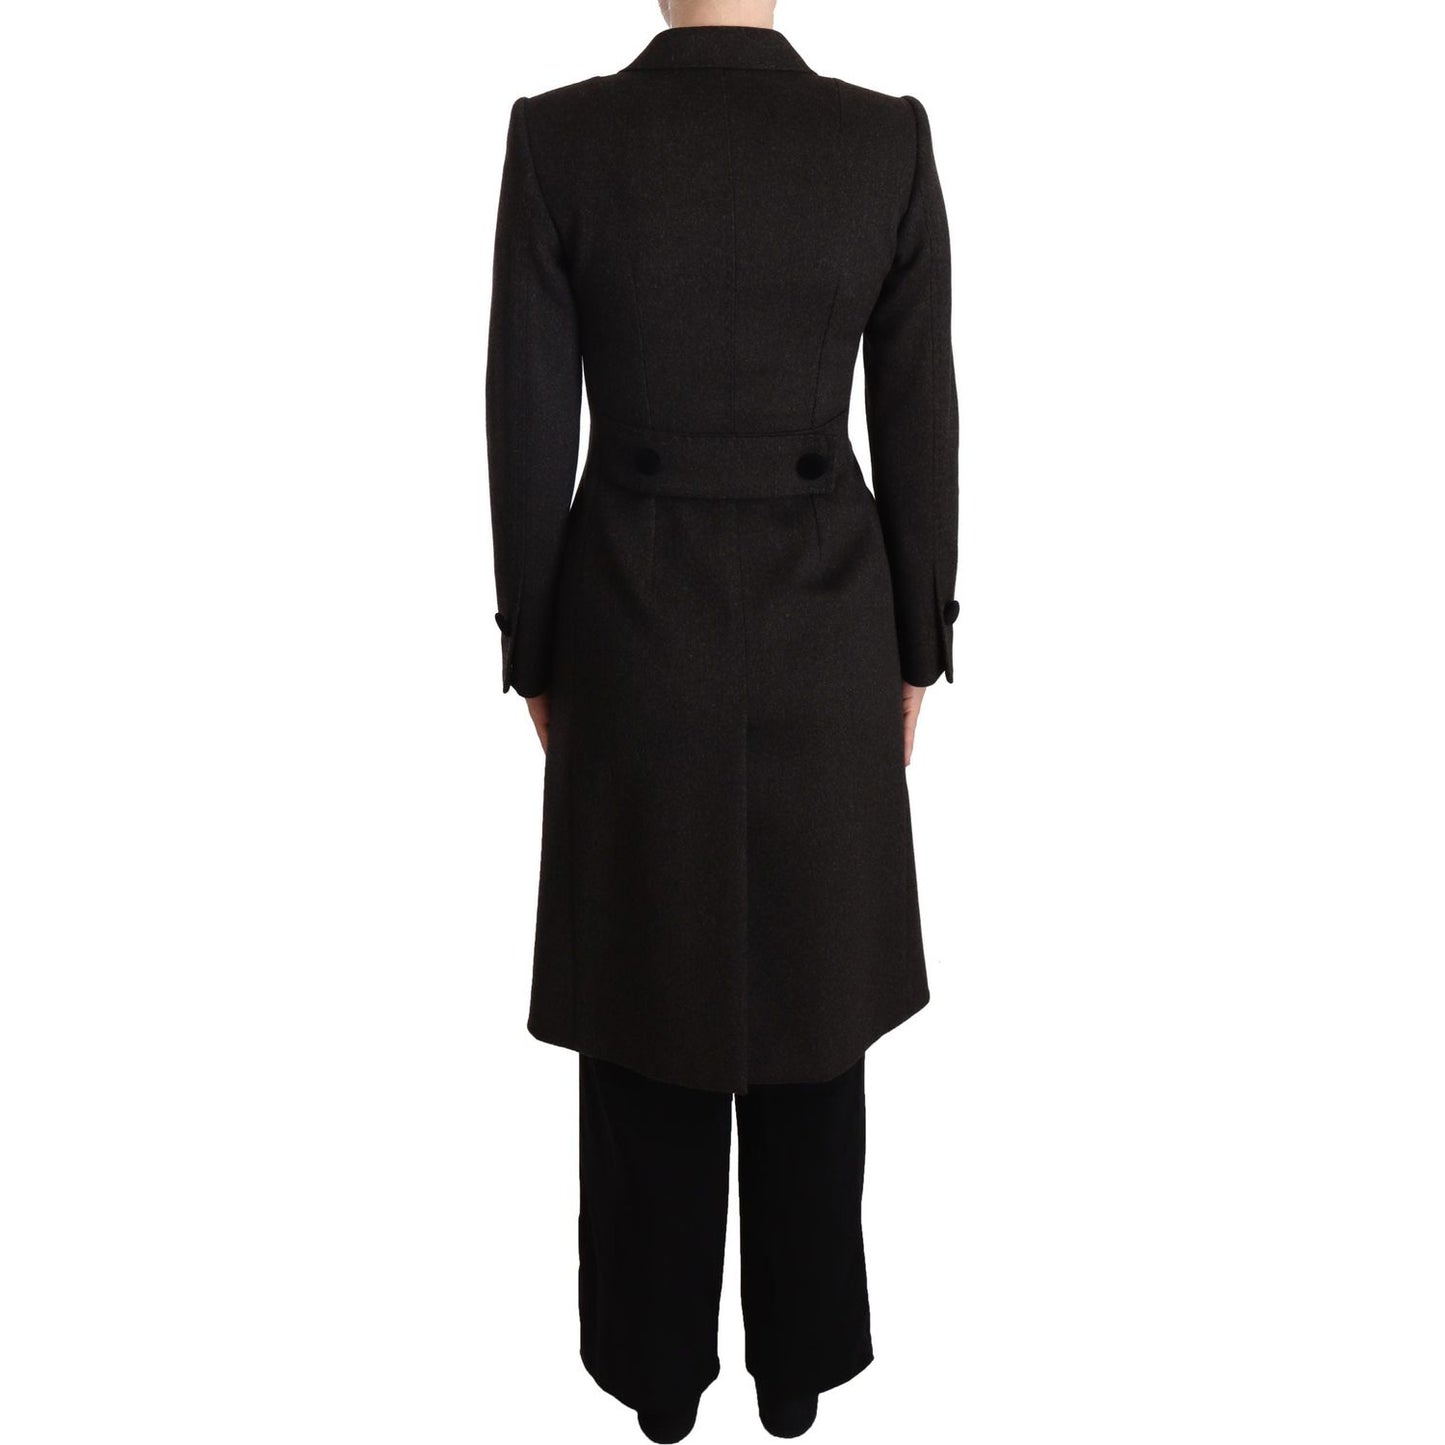 Dolce & Gabbana Elegant Wool-Cashmere Blend Coat in Black Gray gray-wool-cashmere-coat-crest-applique-jacket IMG_1302-scaled-11ca603f-a14.jpg